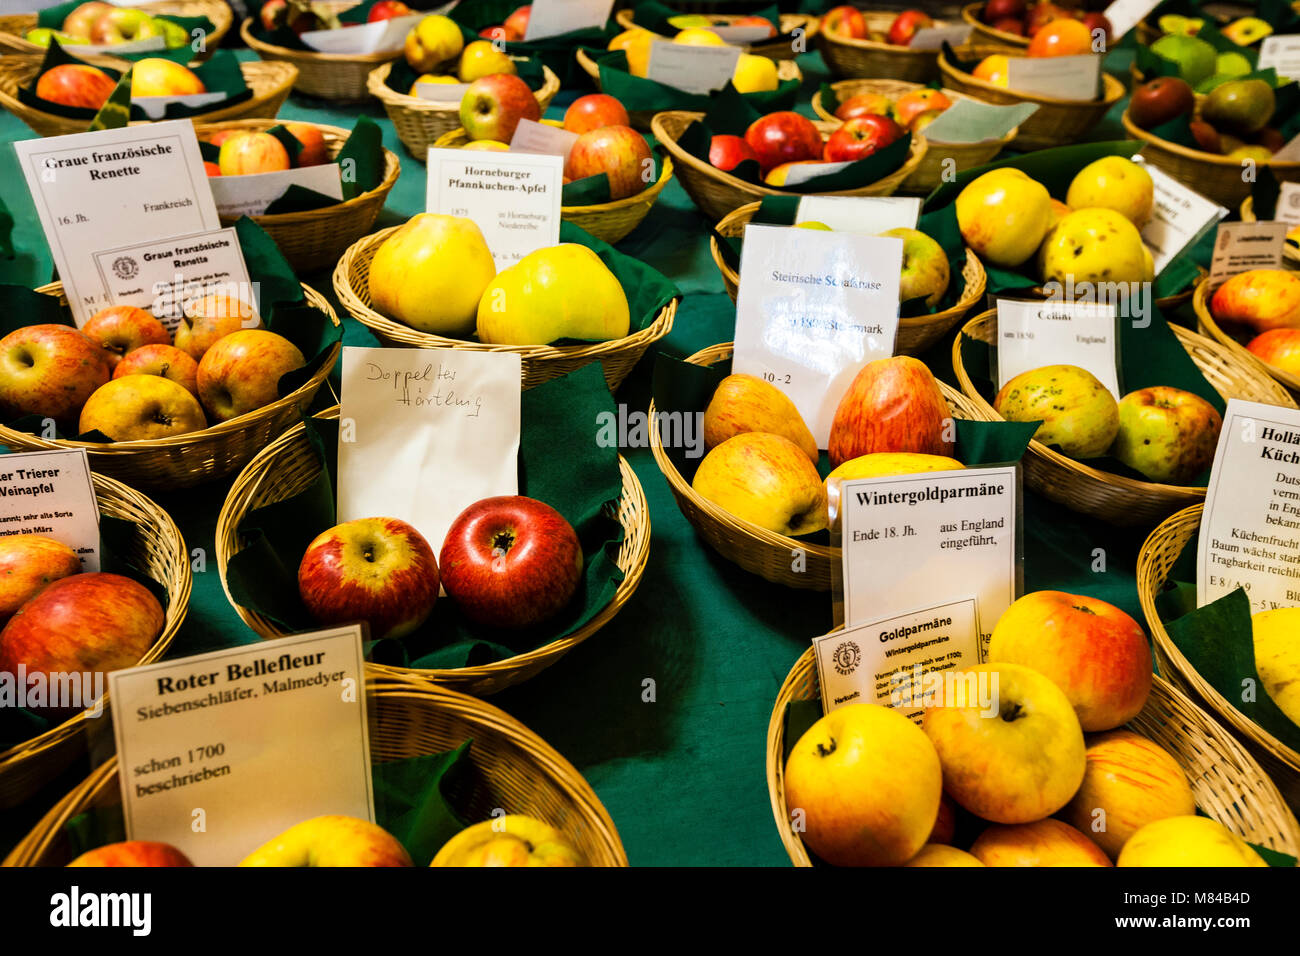 Old German Apple Cultivars in Baskets at Exhibition: Malmedyer Gold parmane, Horneburger, Pancake apple, Winter gold parmane, Hornchury Stock Photo